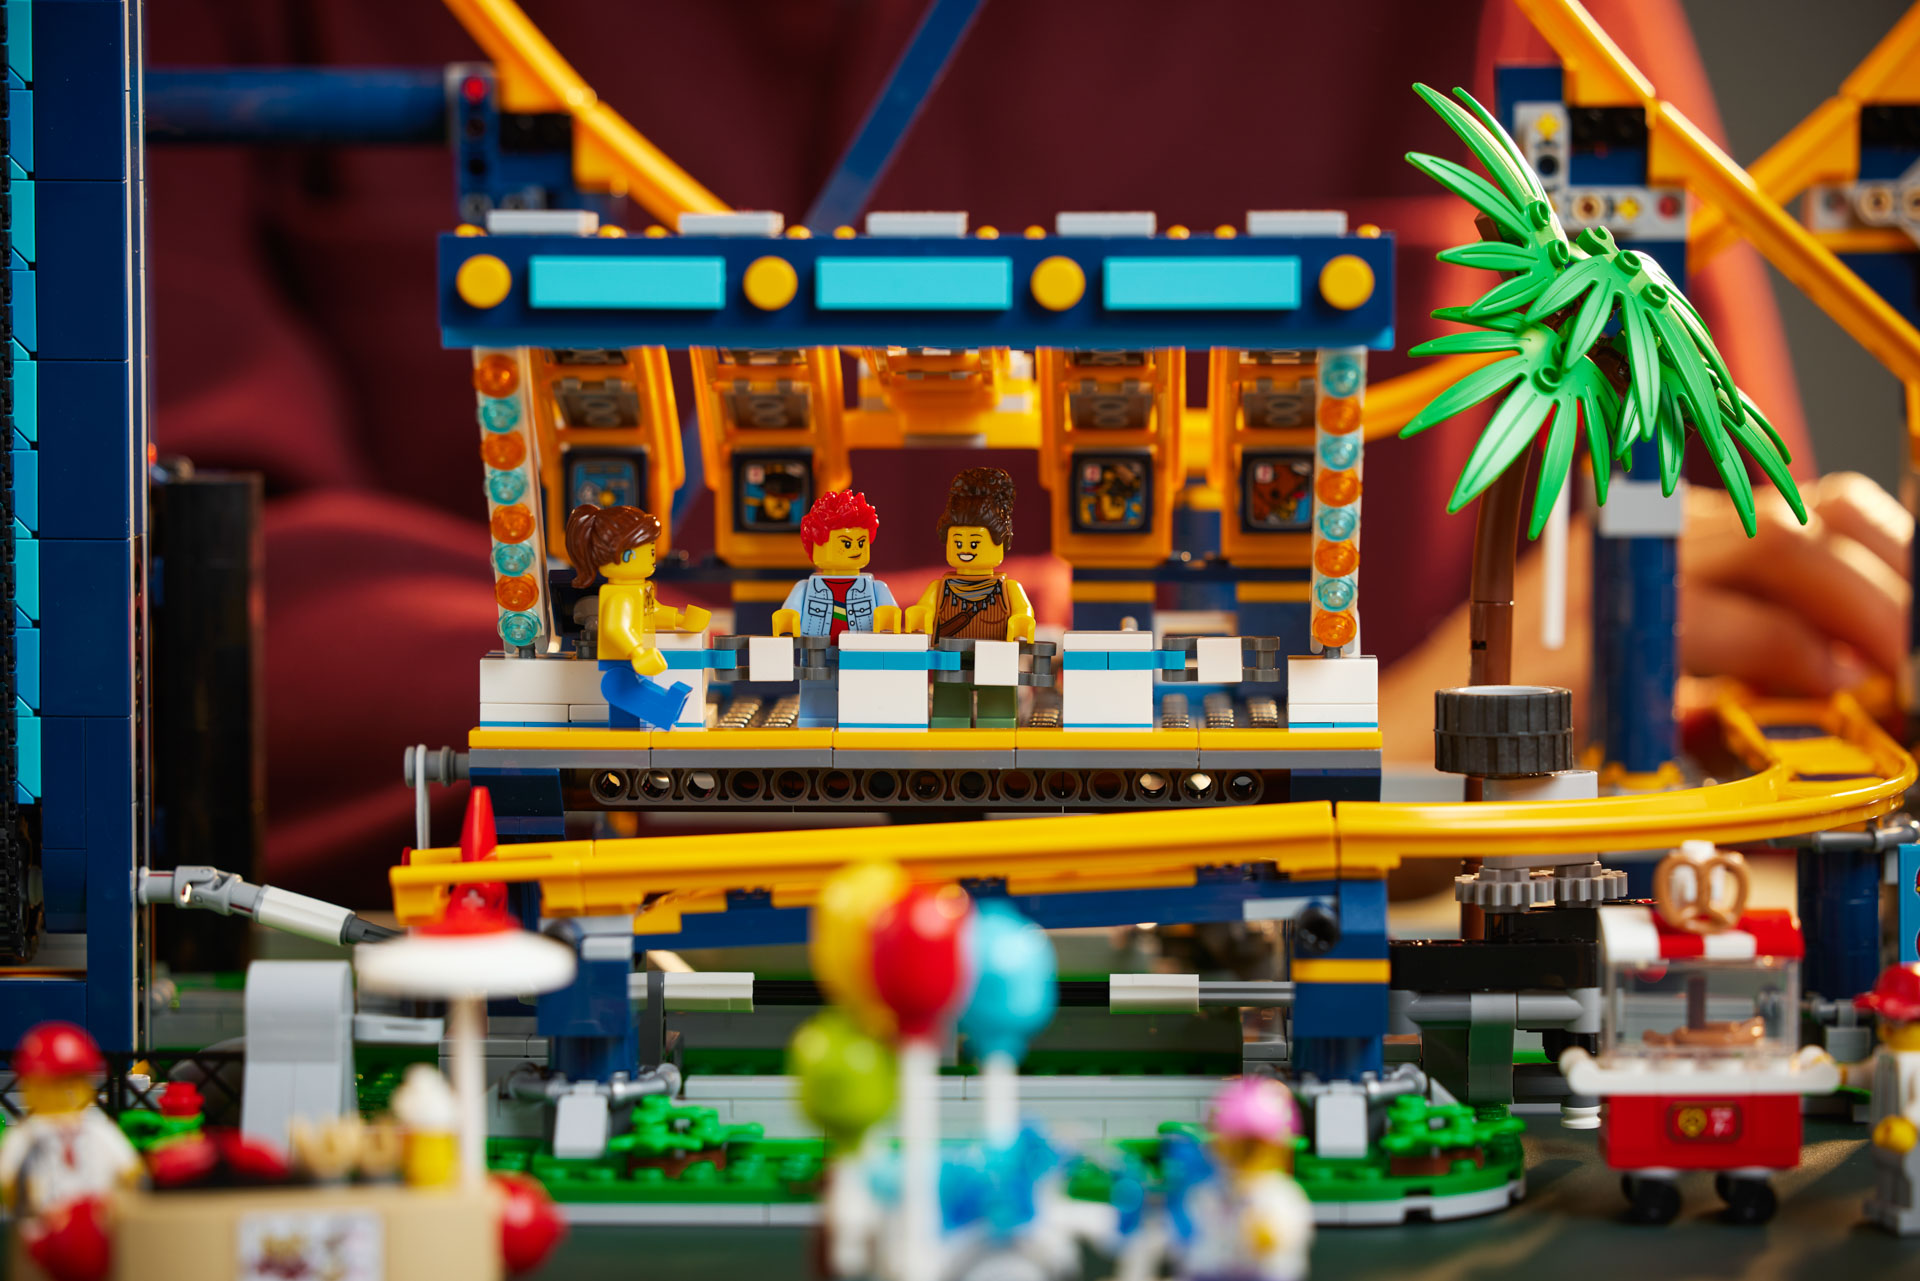 LEGO 10303 - Loop Coaster  - New LEGO Set Announcement Roller Coaster